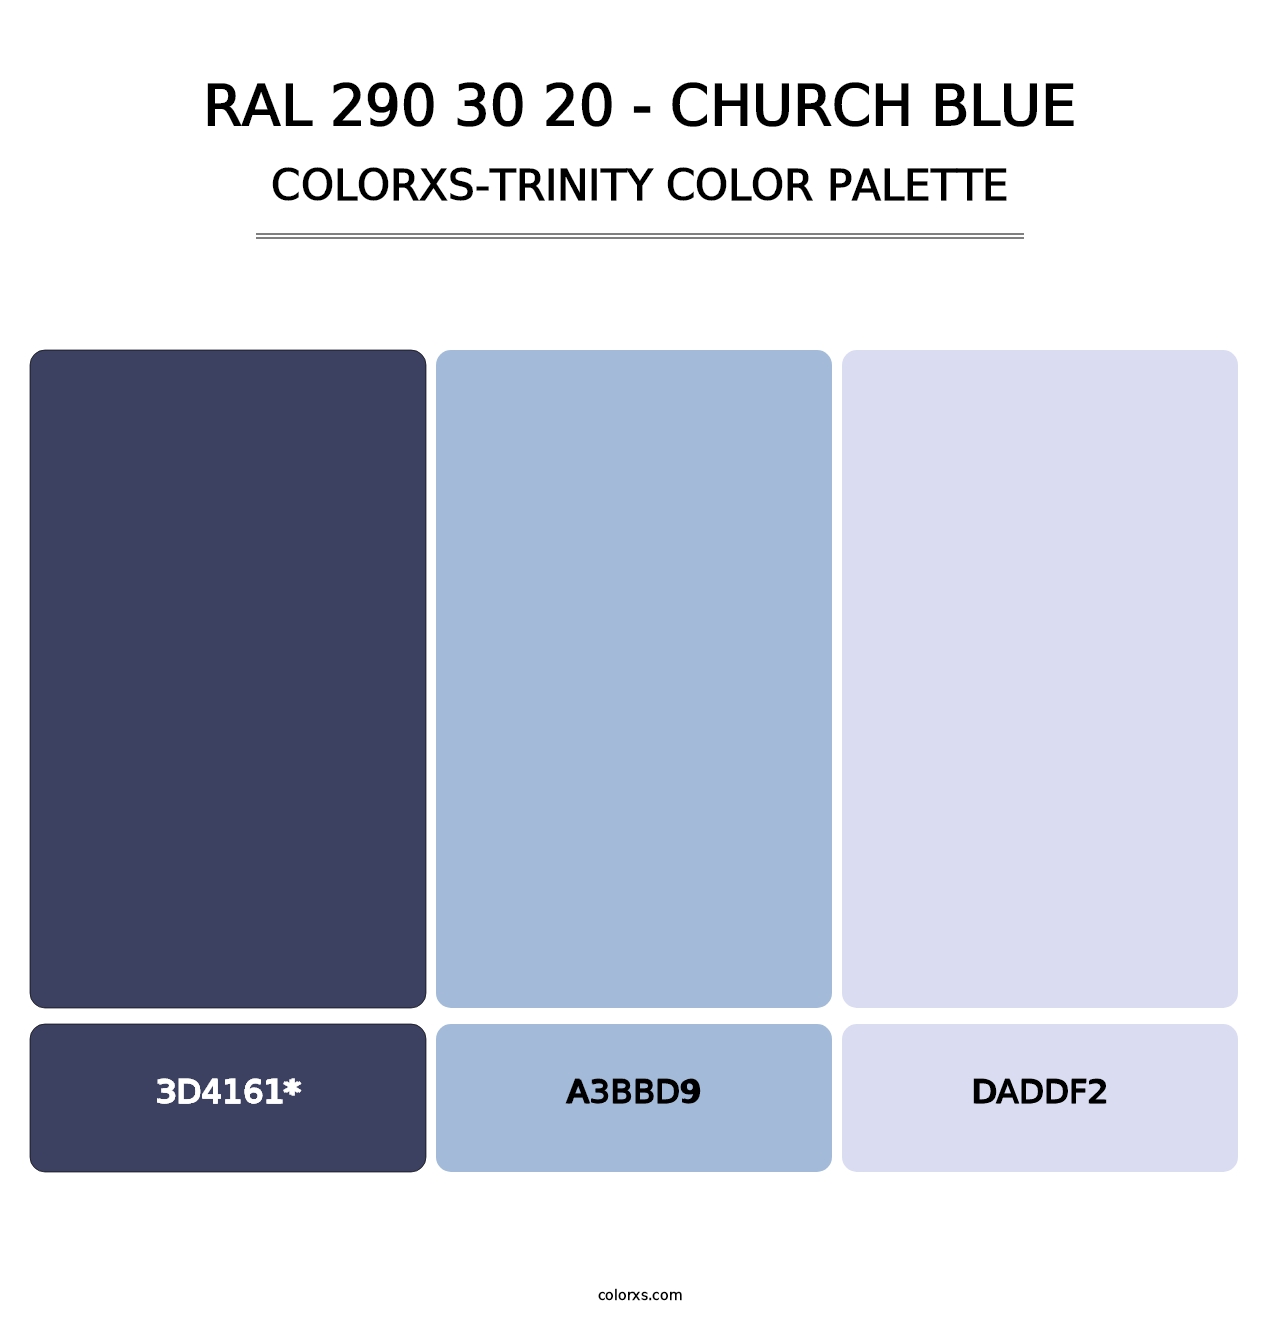 RAL 290 30 20 - Church Blue - Colorxs Trinity Palette